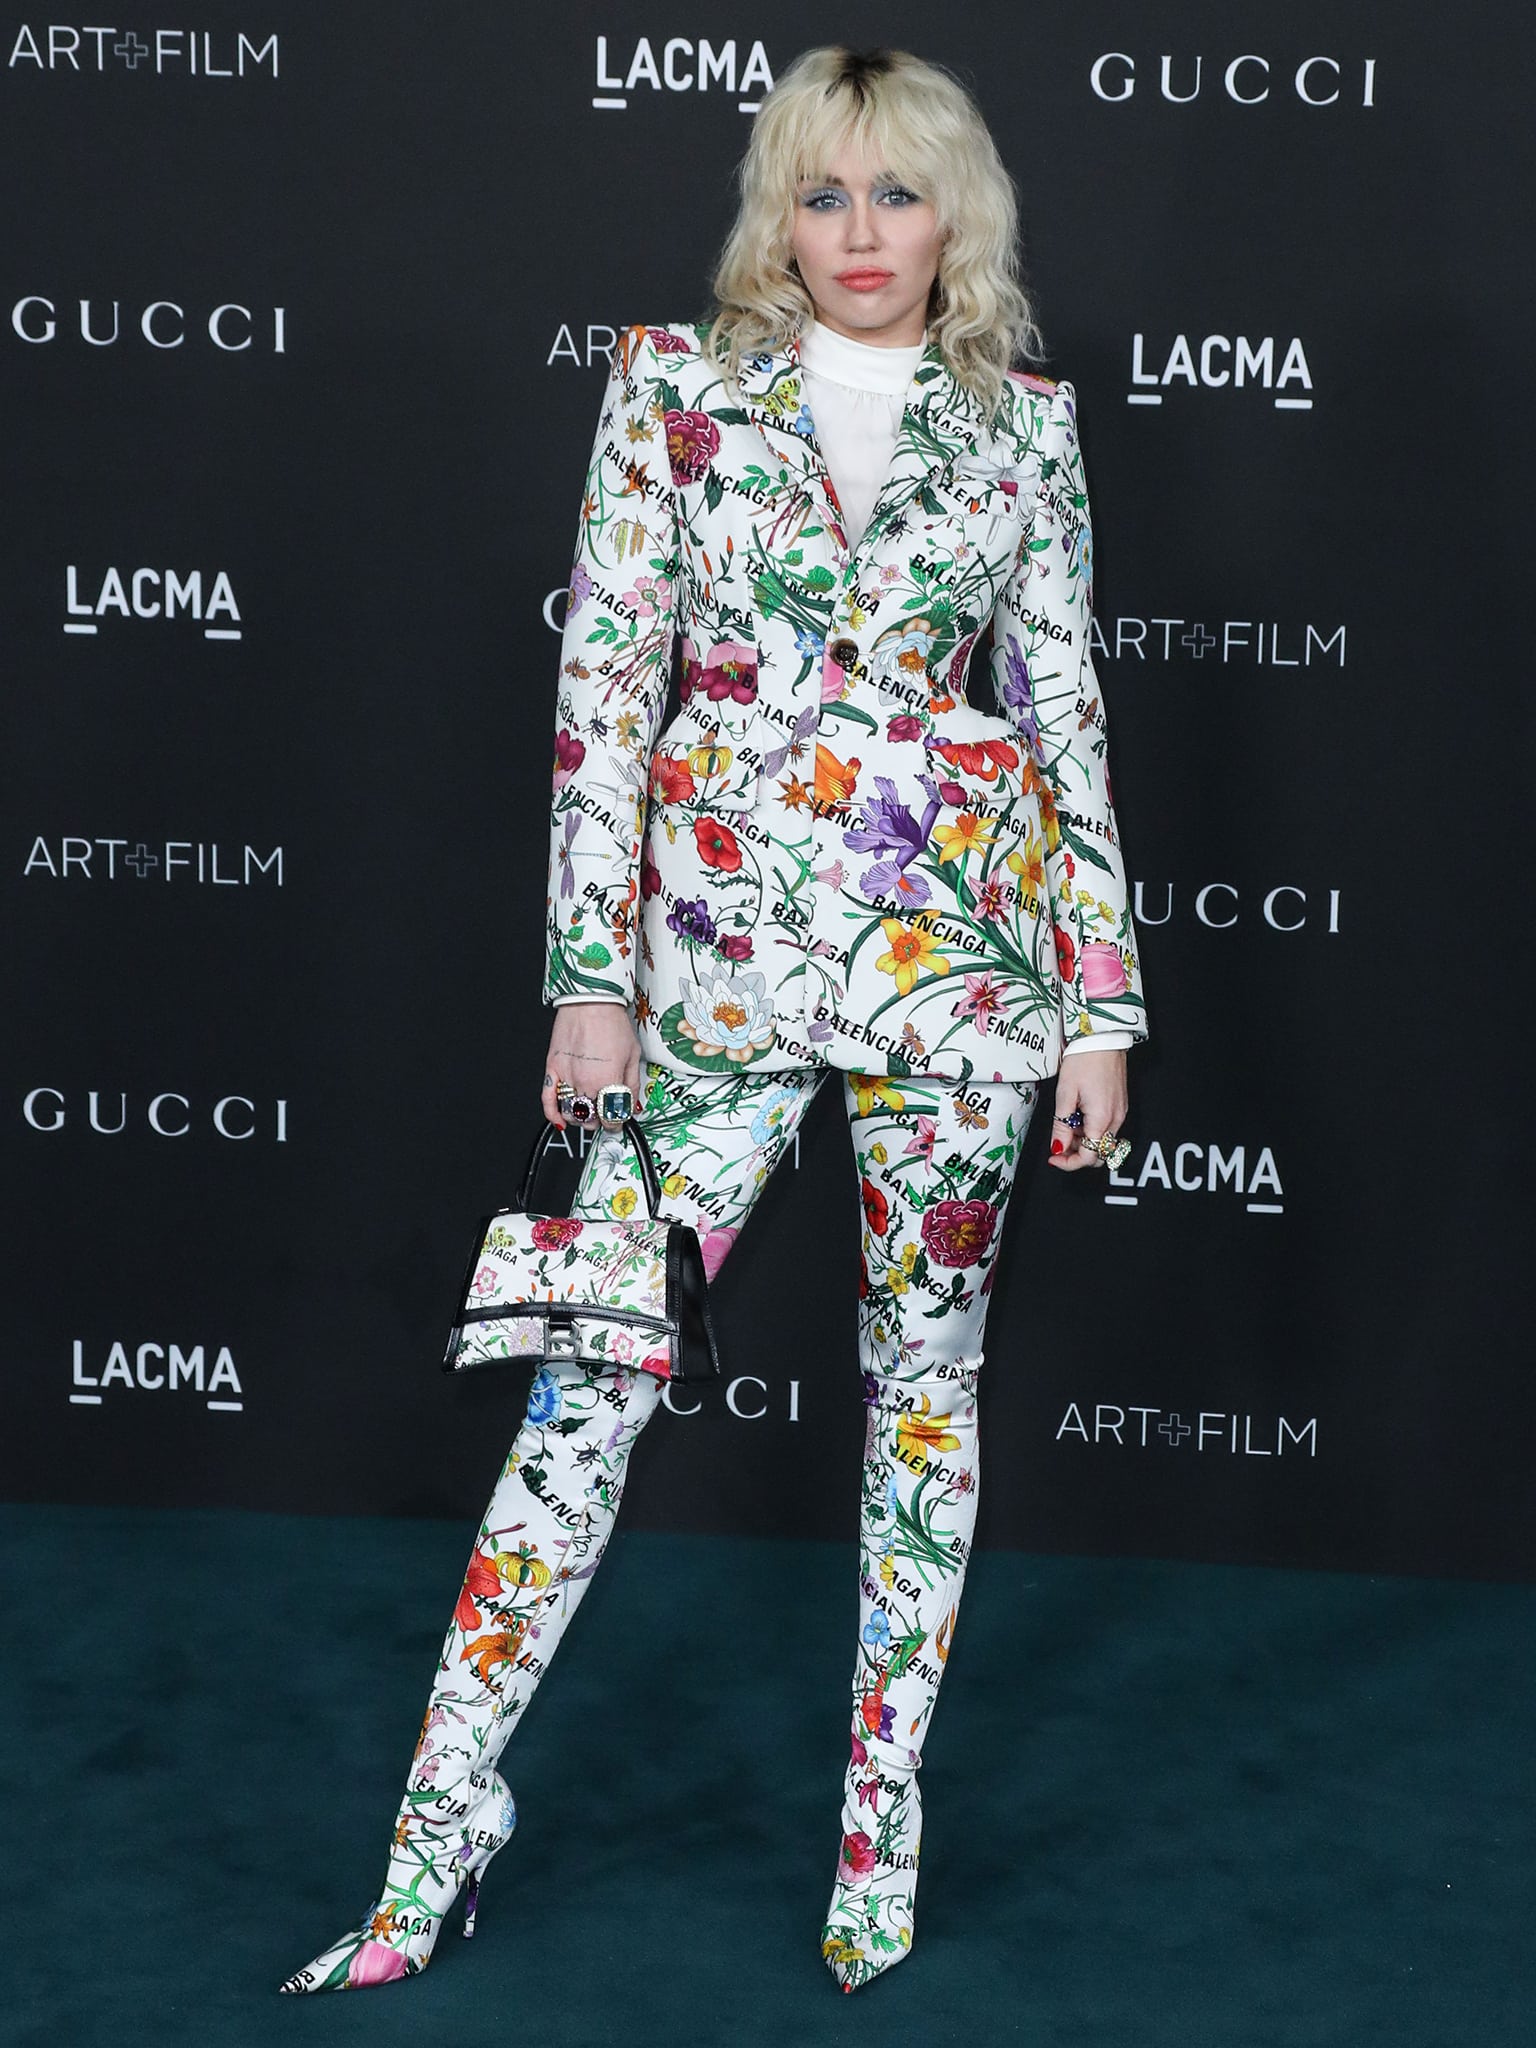 Miley Cyrus at the 10th Annual LACMA Art + Film Gala 2021 on November 6, 2021